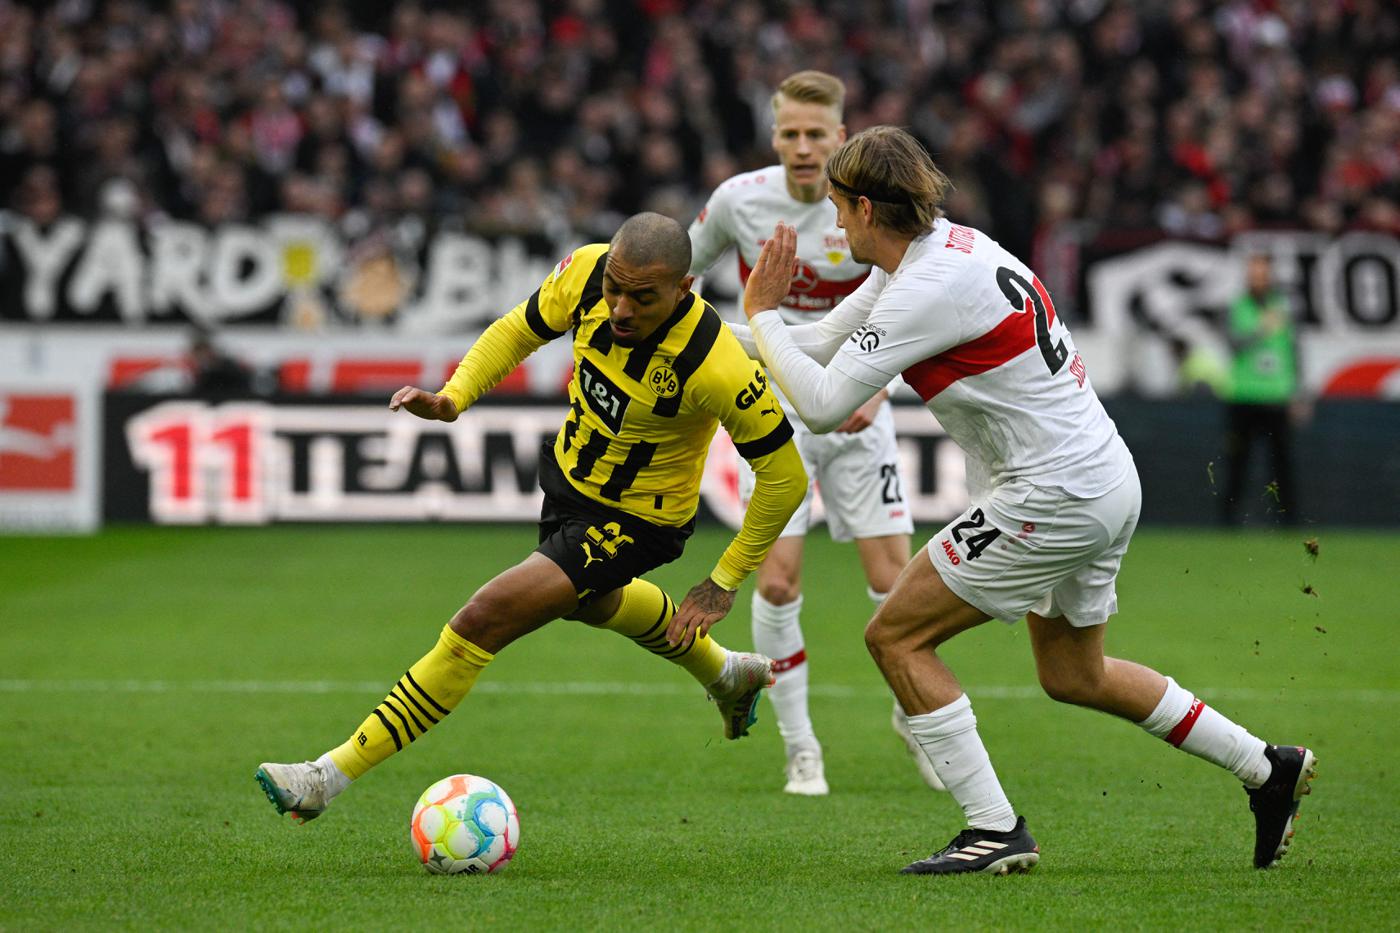 Stuttgart - Borussia D - 3:3. German Championship, round of 28. Match review,